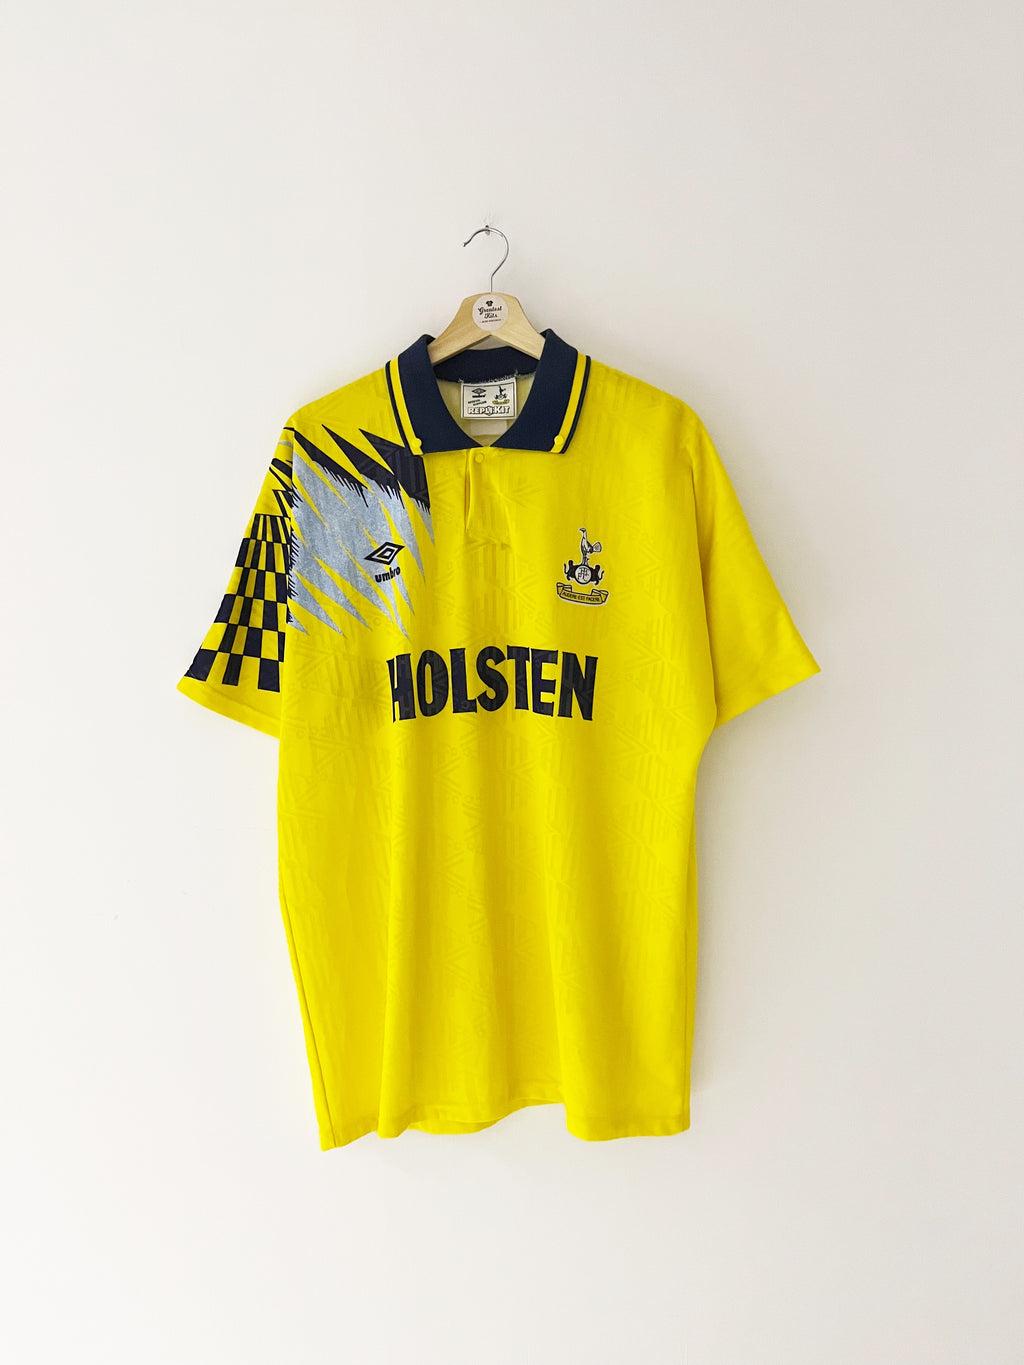 Maillot extérieur Tottenham Hotspur 1991/95 (XL) 9/10